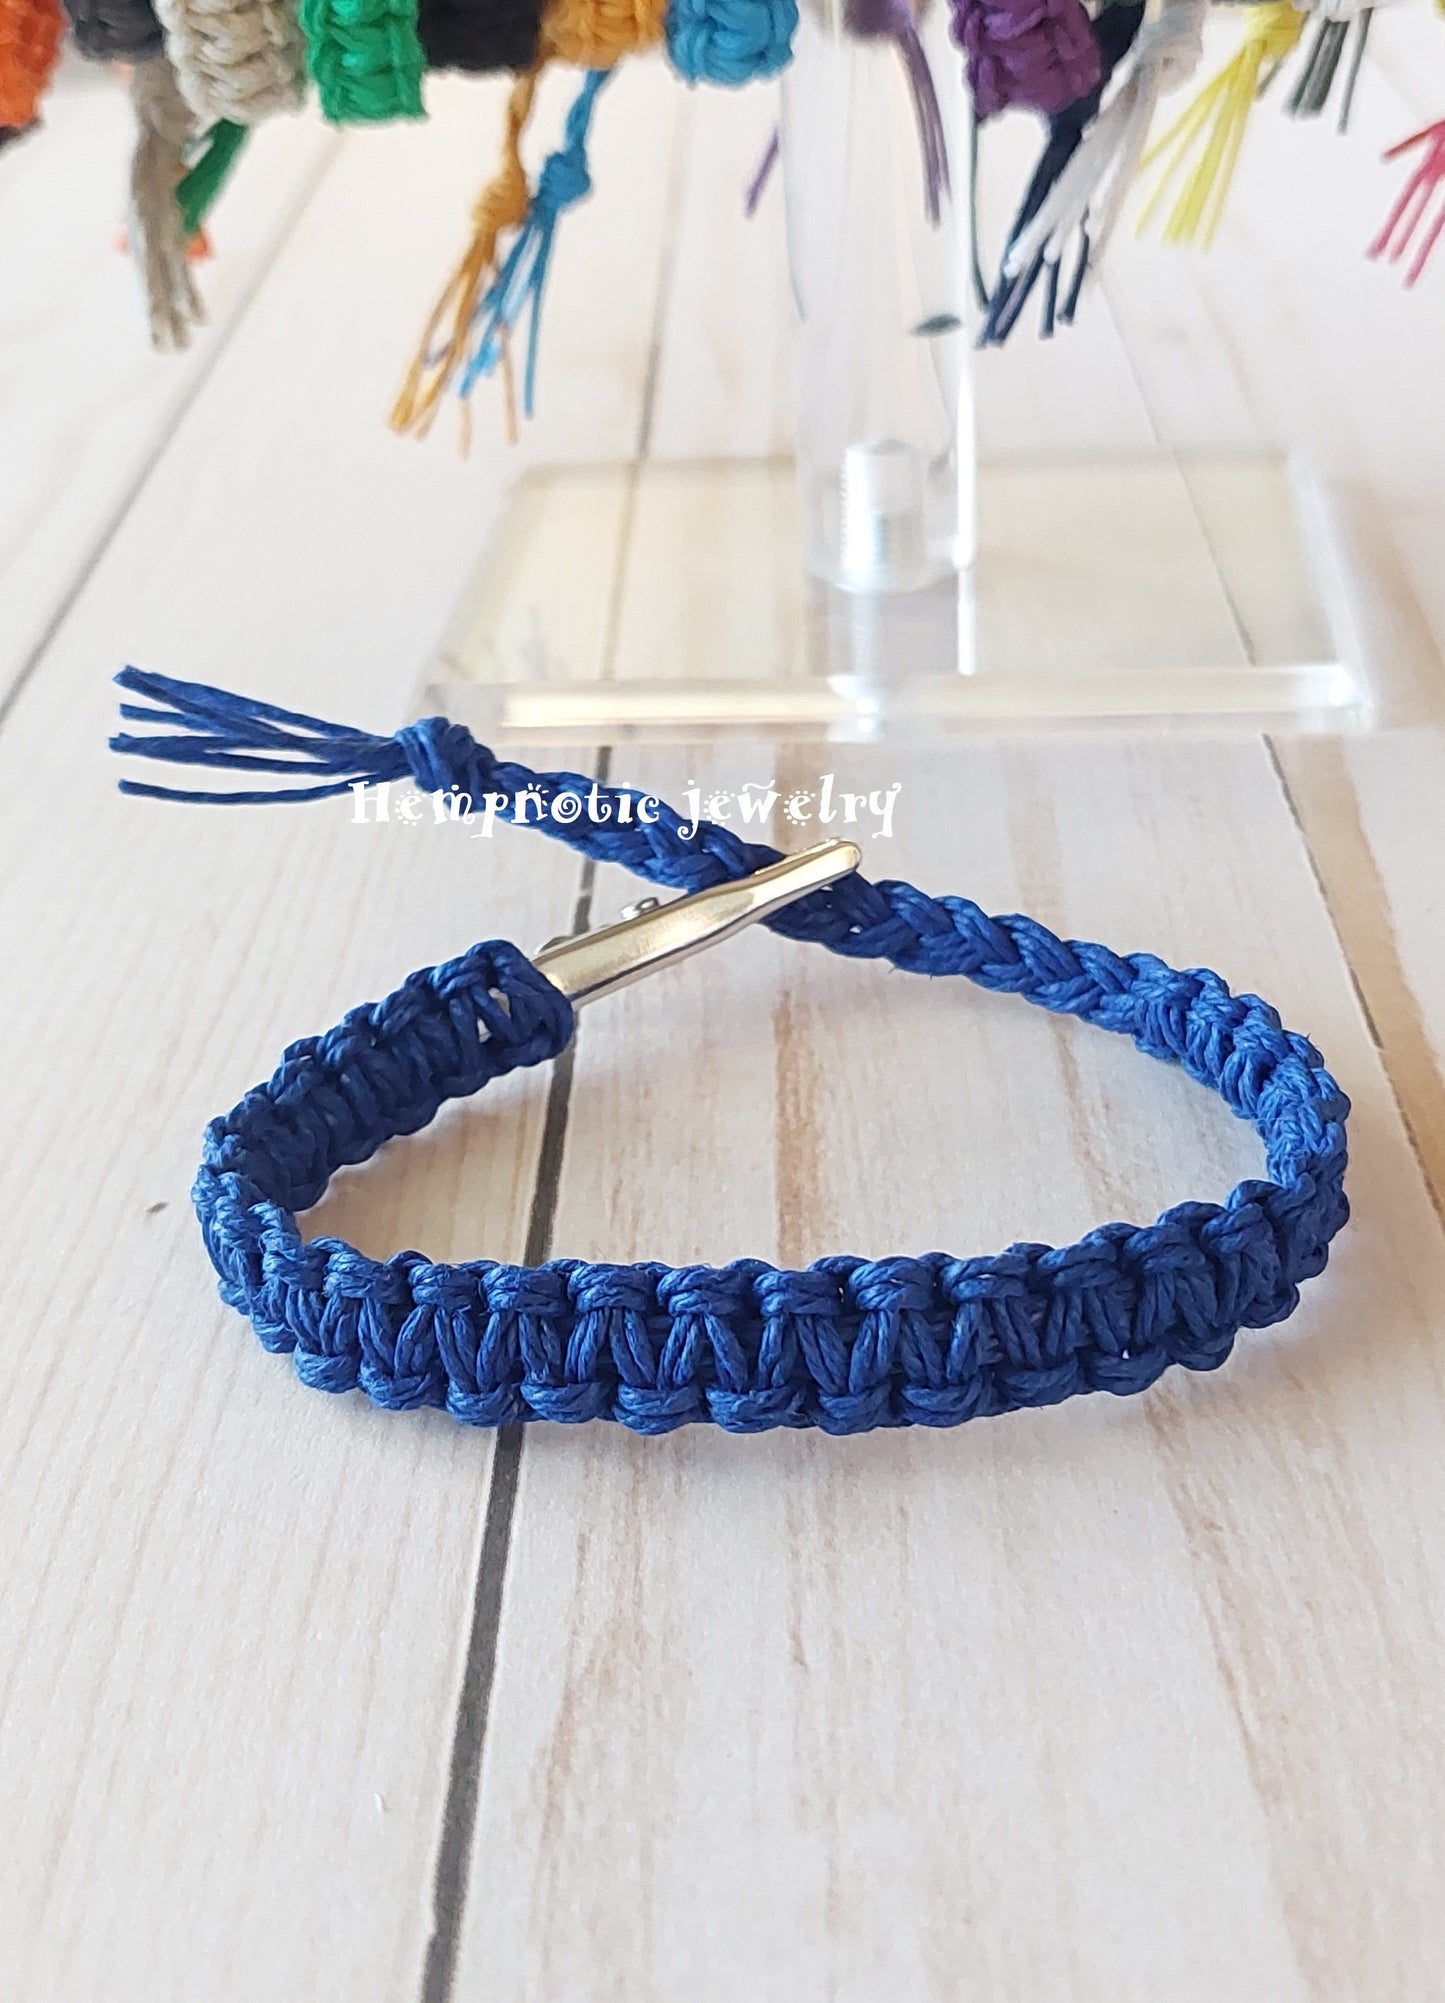 roach clip blue hemp bracelet with alligator clip clasp